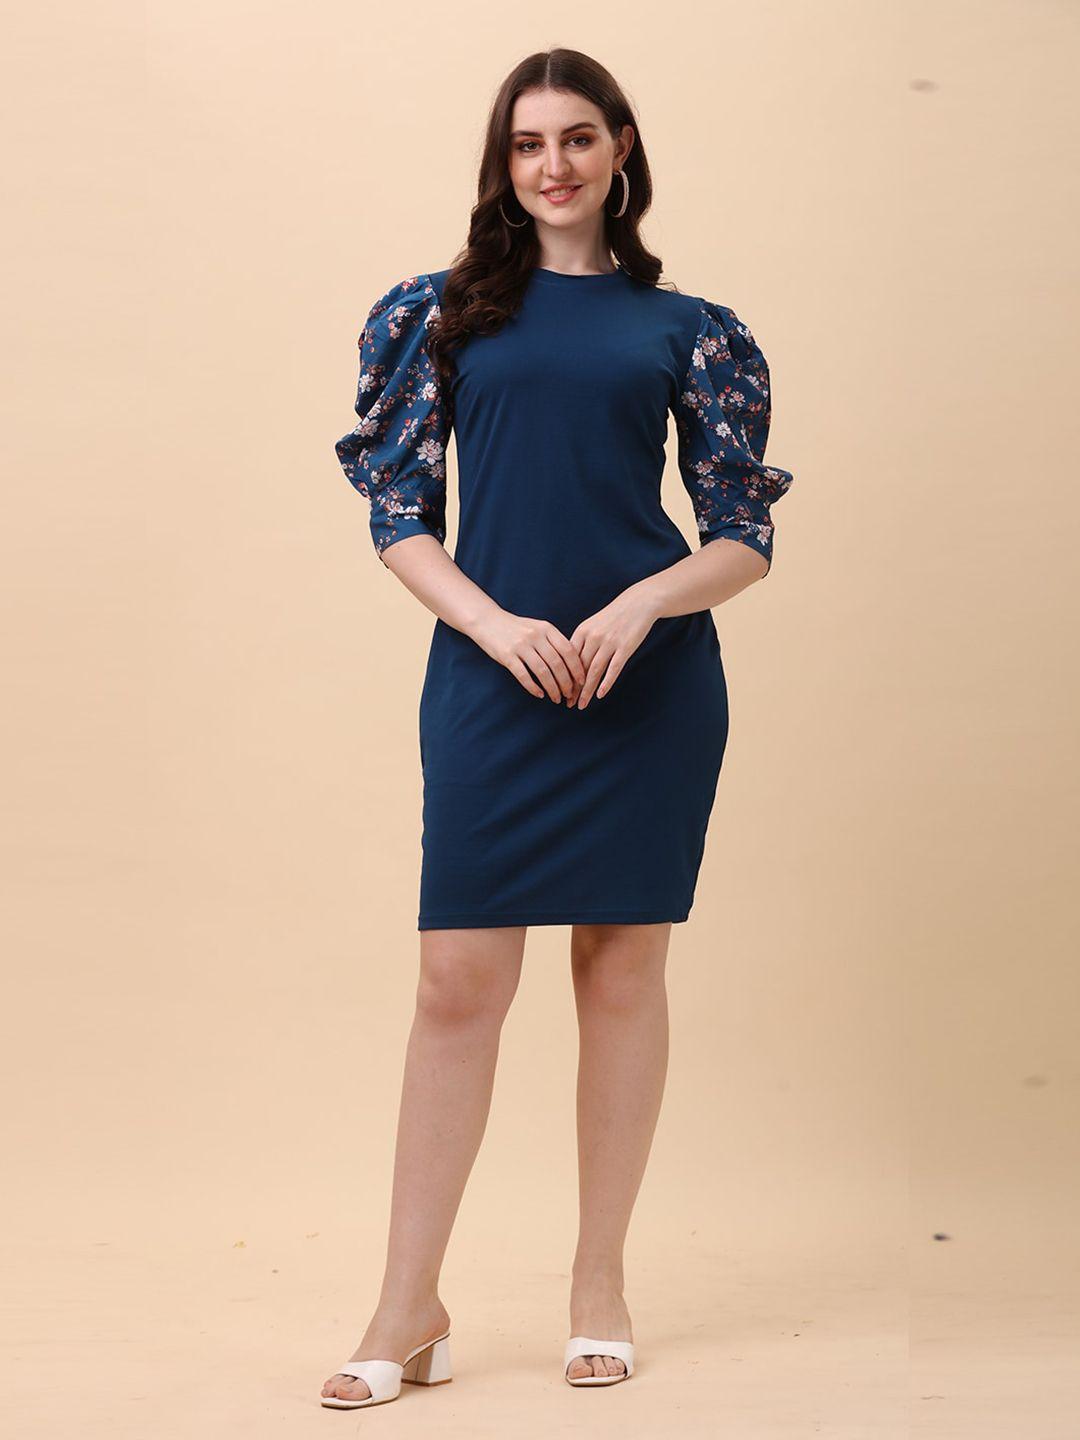 deklook turquoise blue cold-shoulder crepe sheath dress